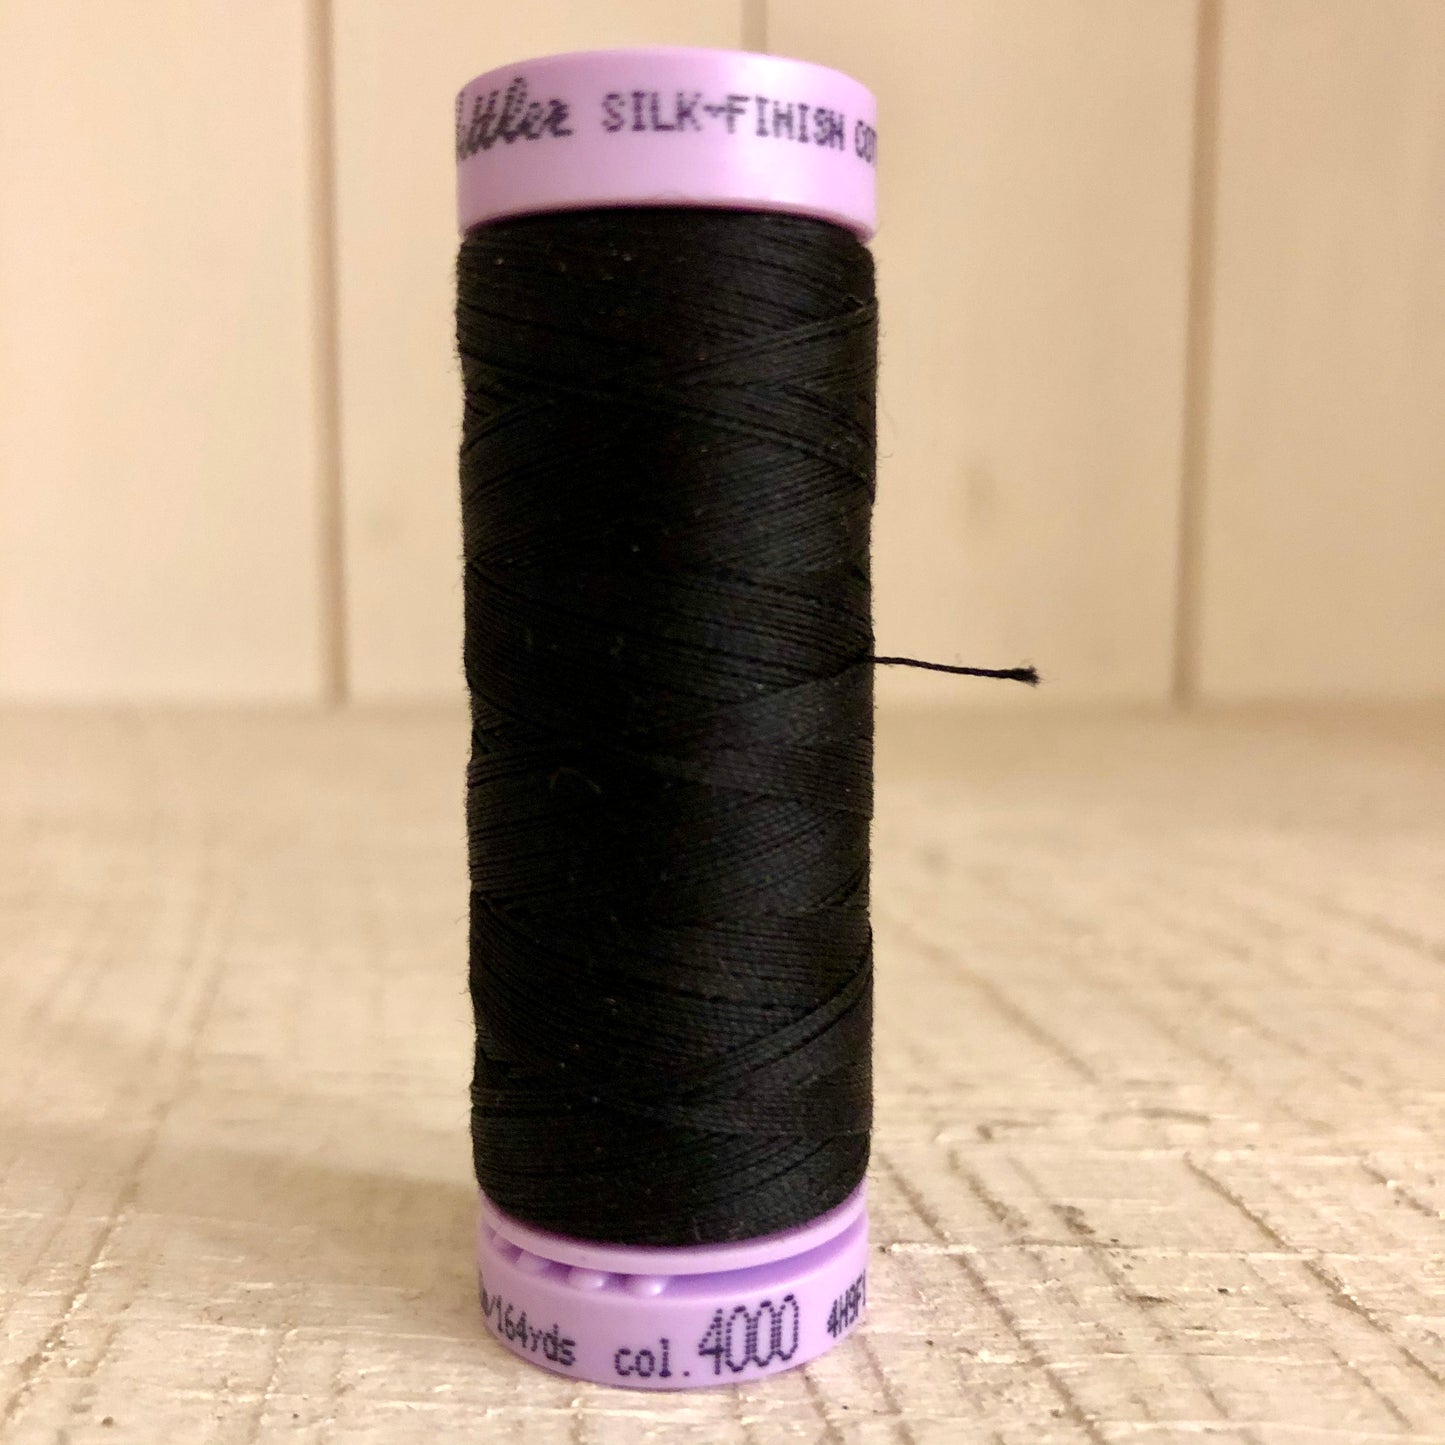 Mettler Silk Finish Cotton Thread, Black 4000, 150 meter Spool